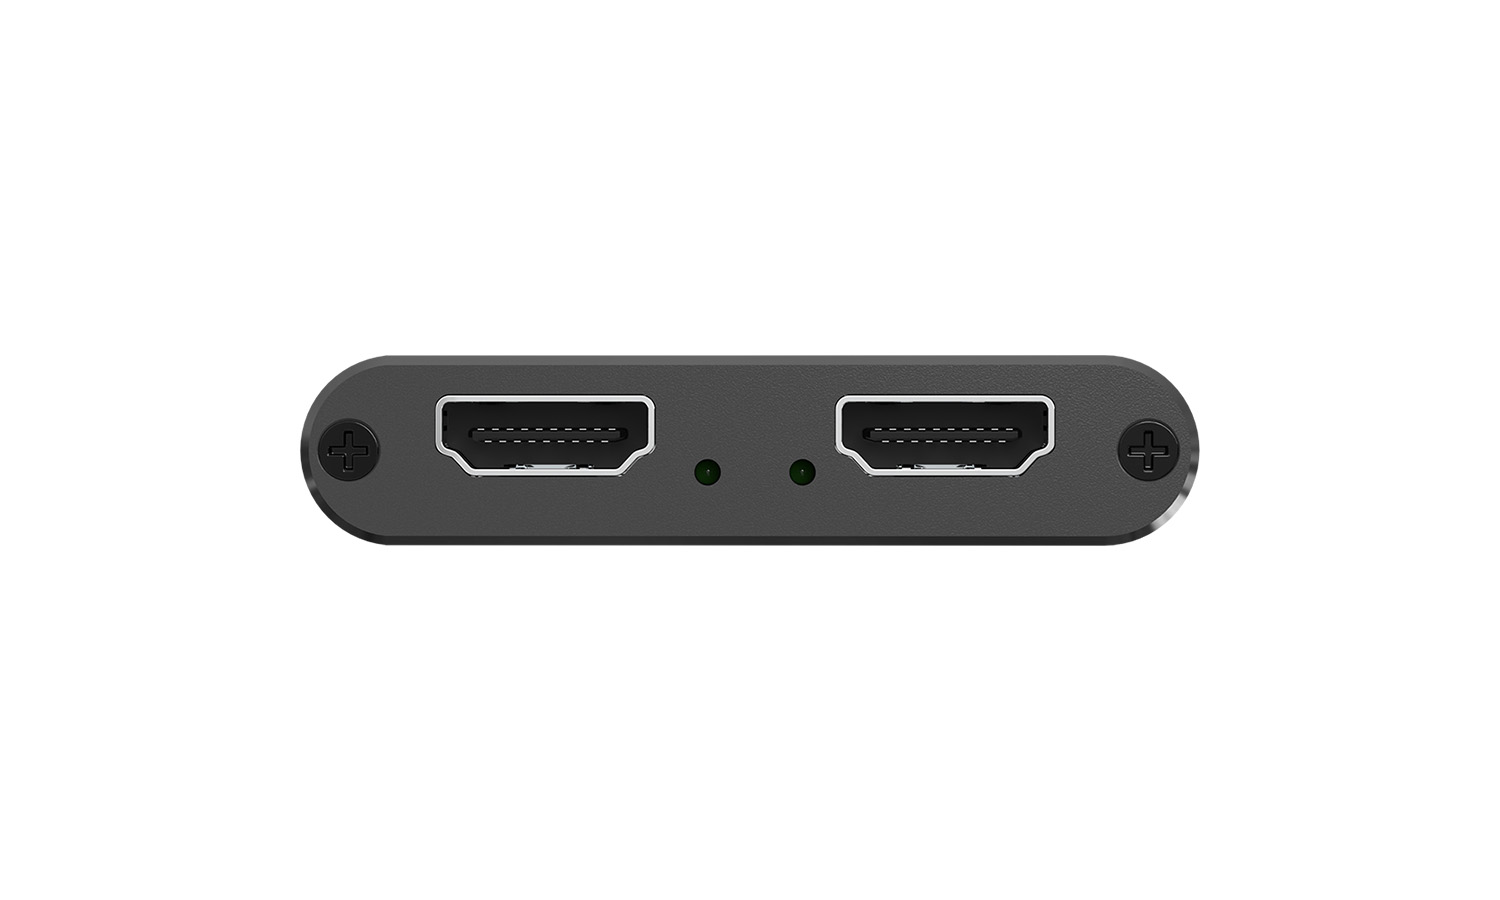 BZBGEAR BG-CAP-HA USB 3.0 Powered HDMI Capture Device